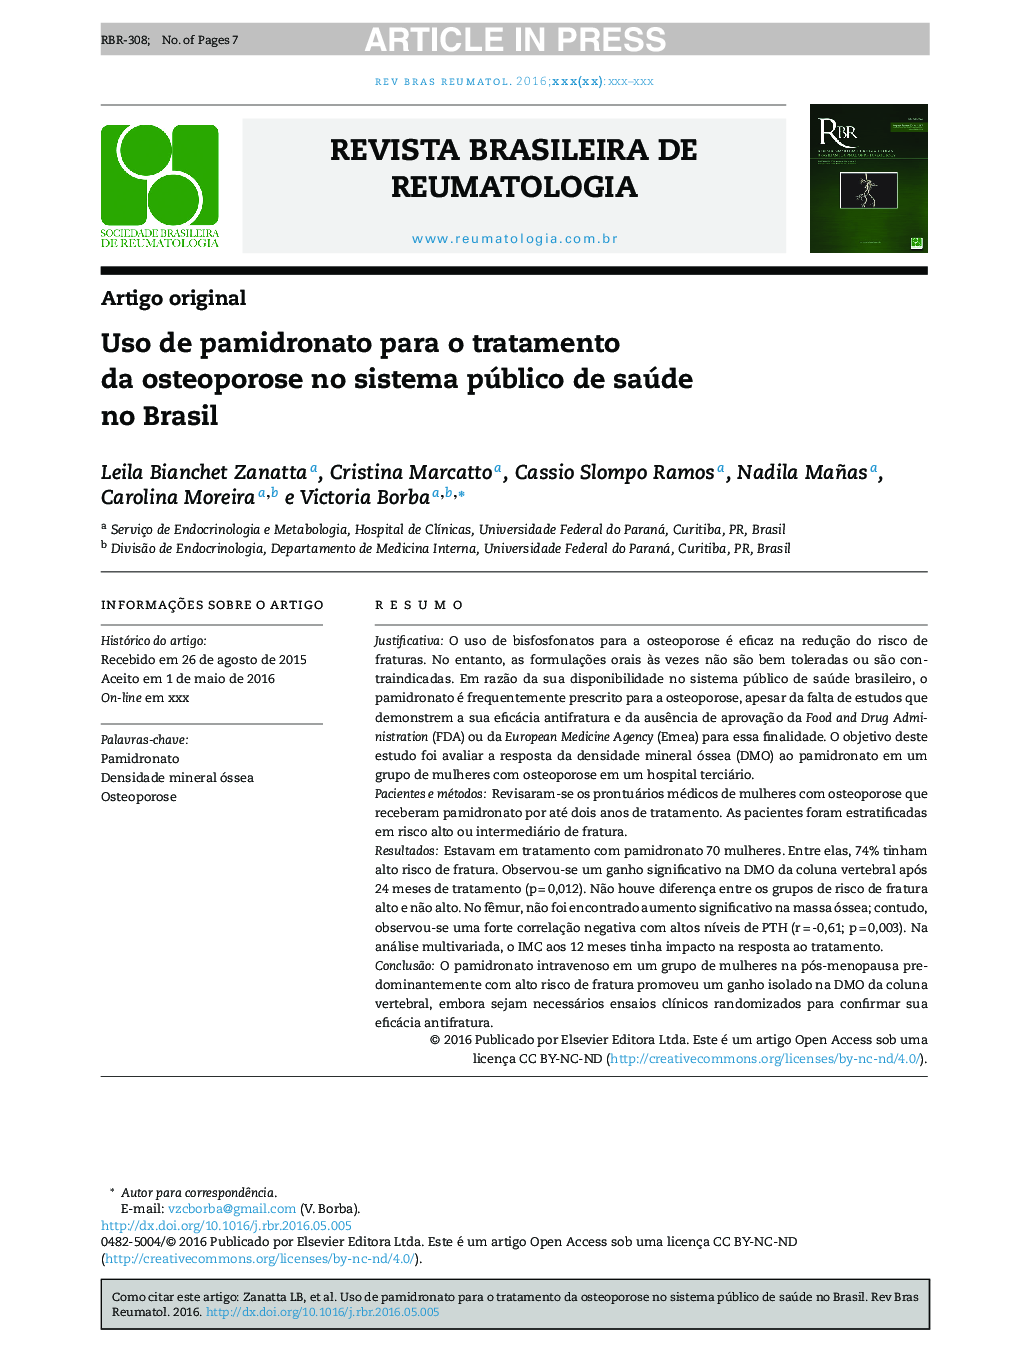 Uso de pamidronato para o tratamento da osteoporose no sistema público de saúde no Brasil